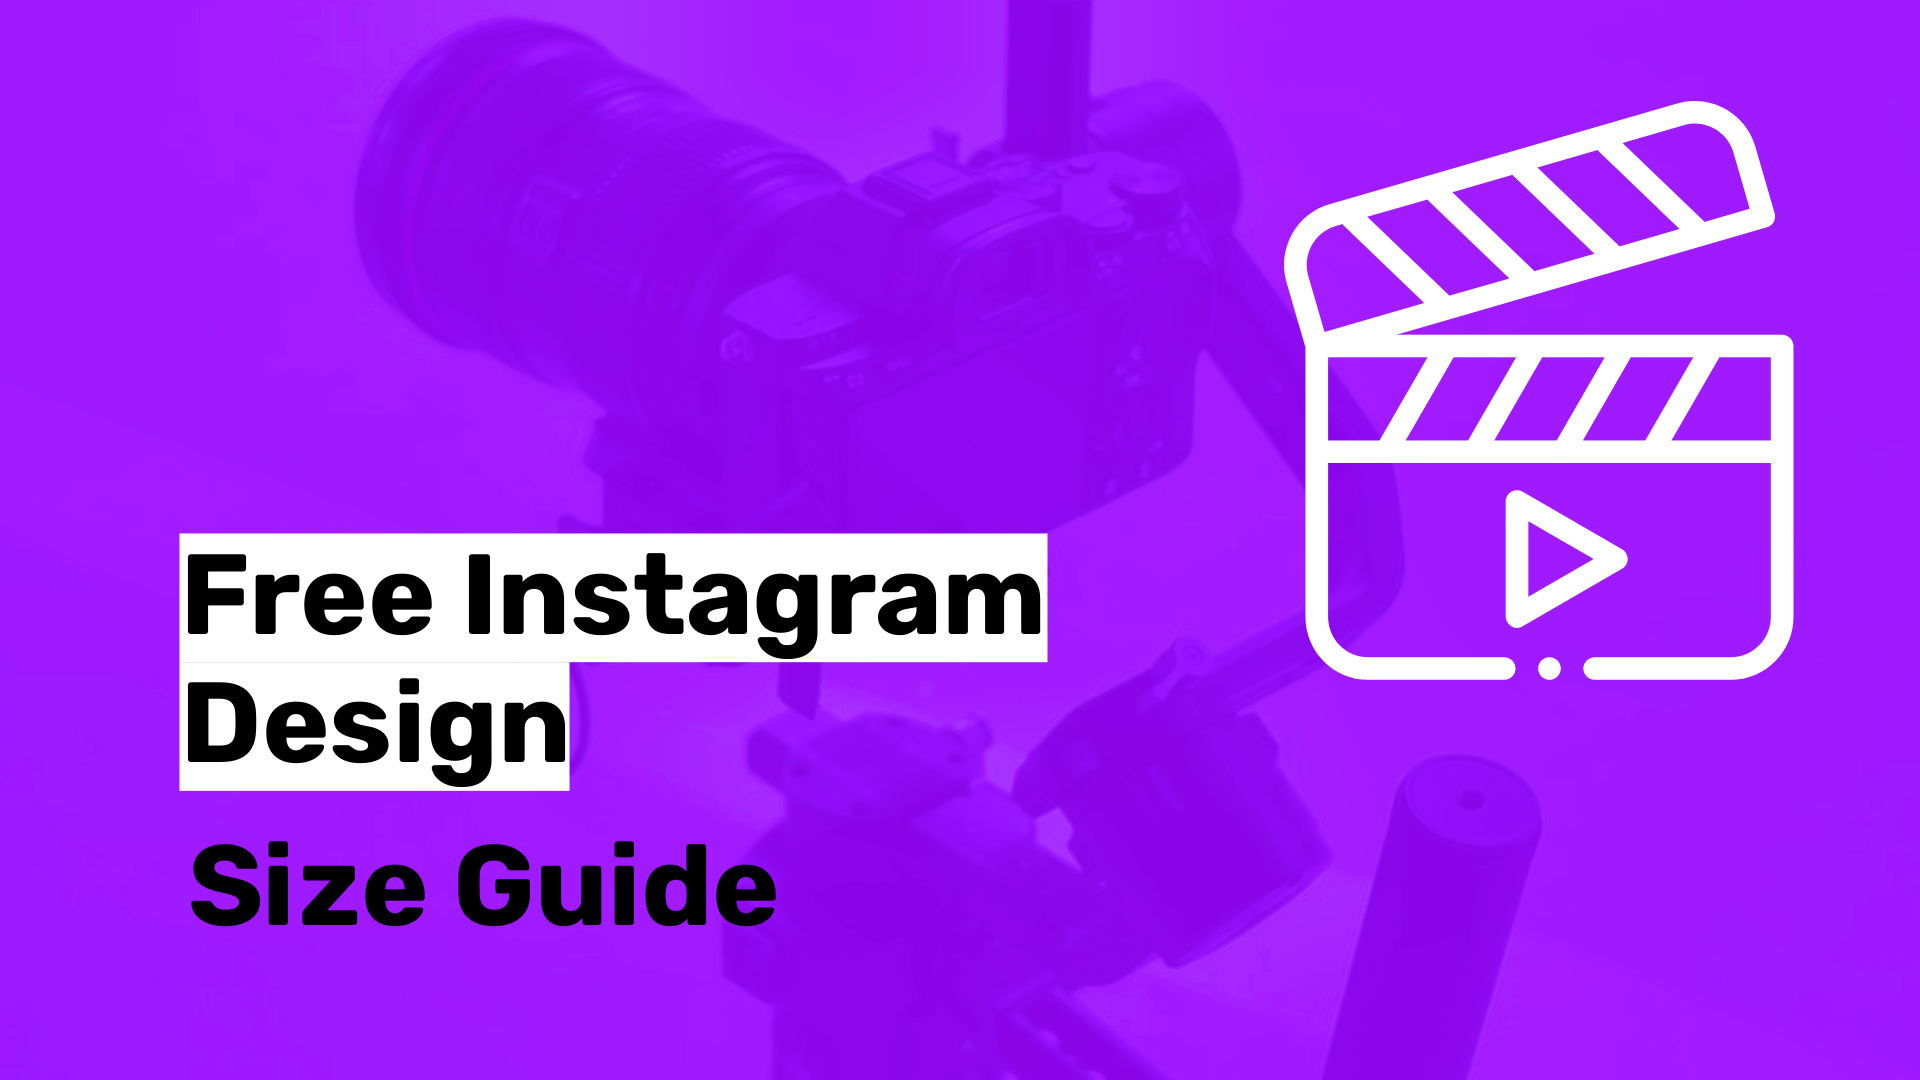 Free Instagram Design Size Guide